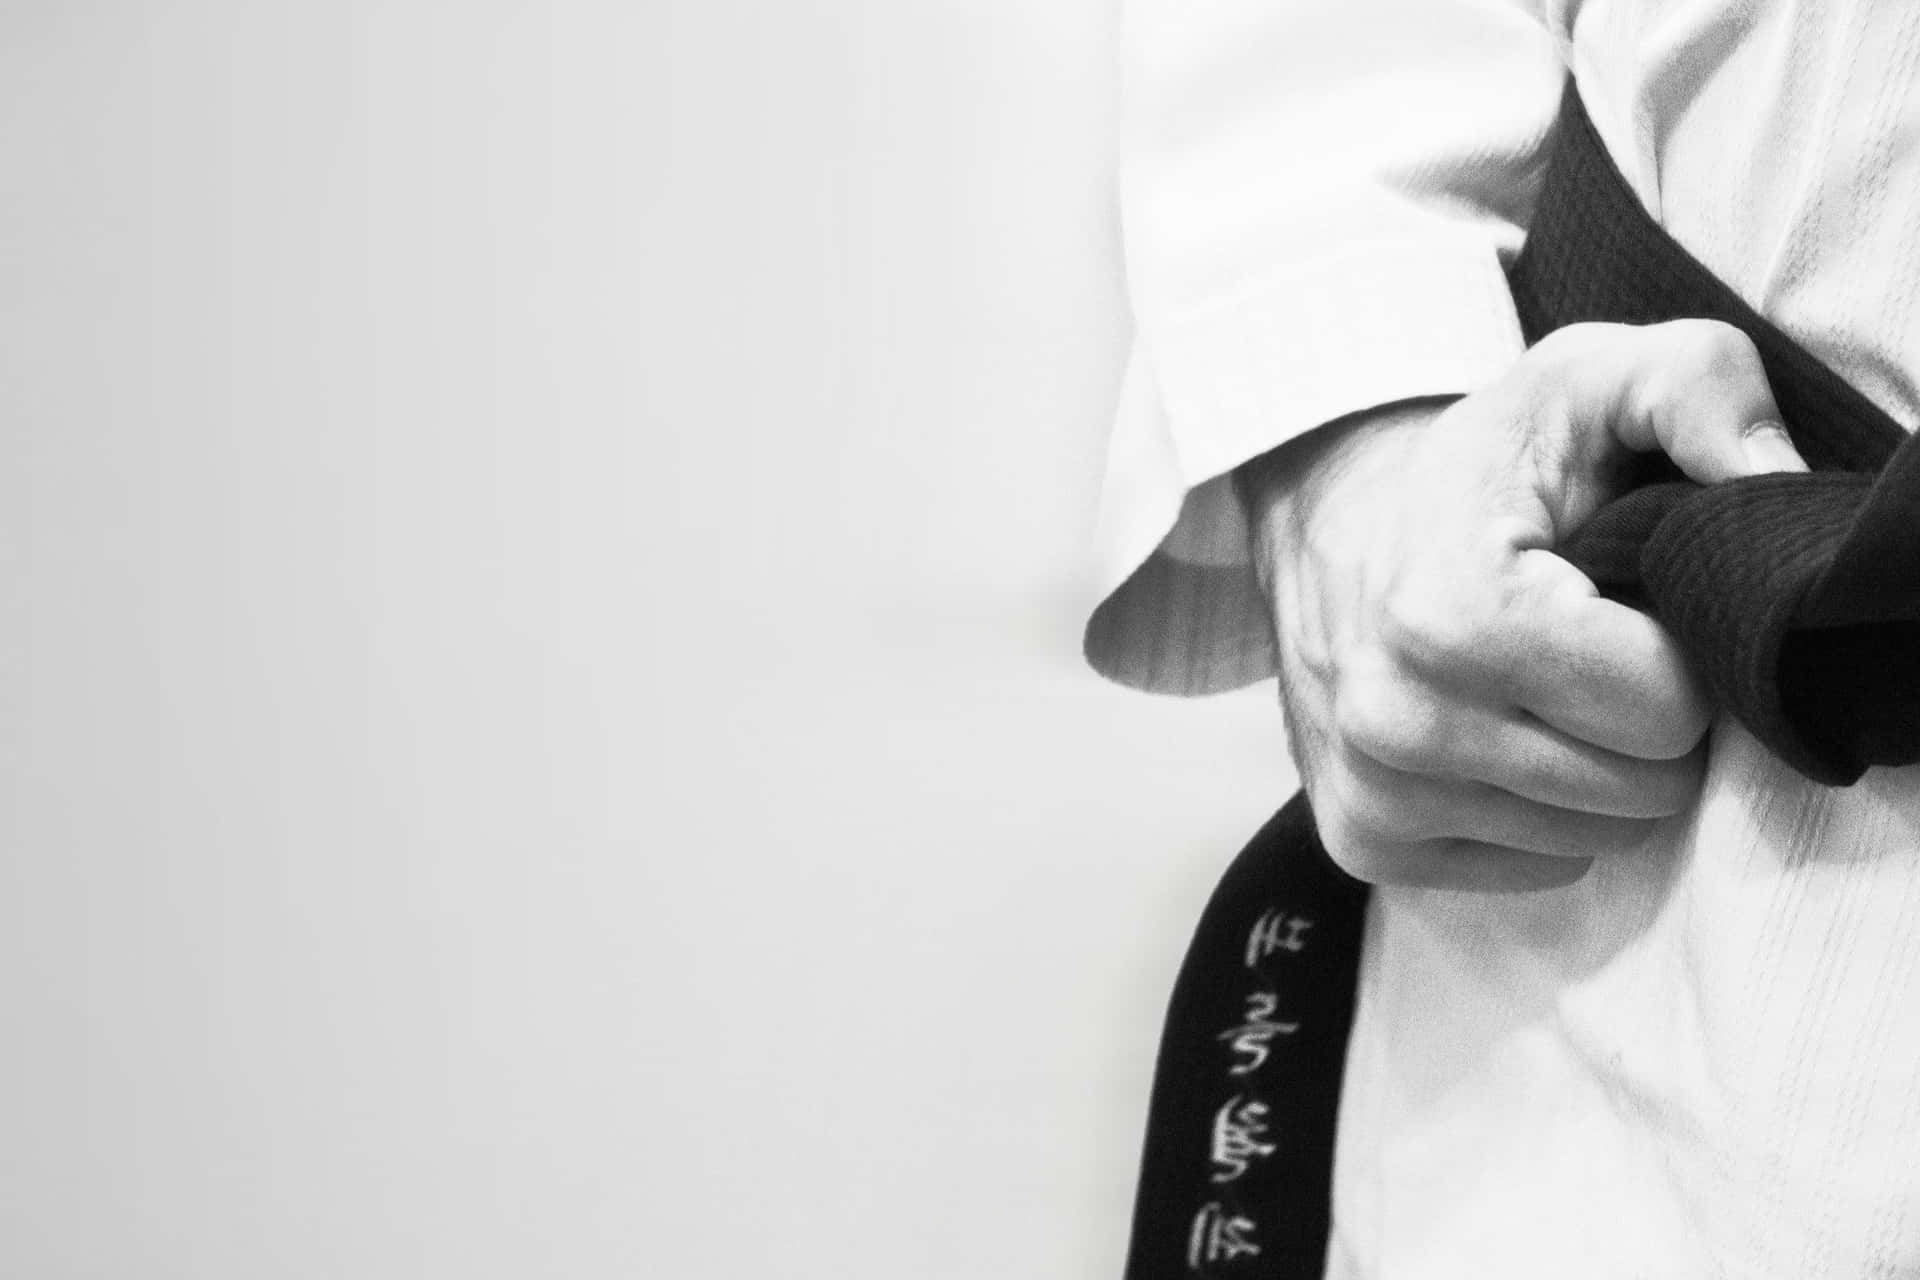 Hintergrundmit Taekwondo